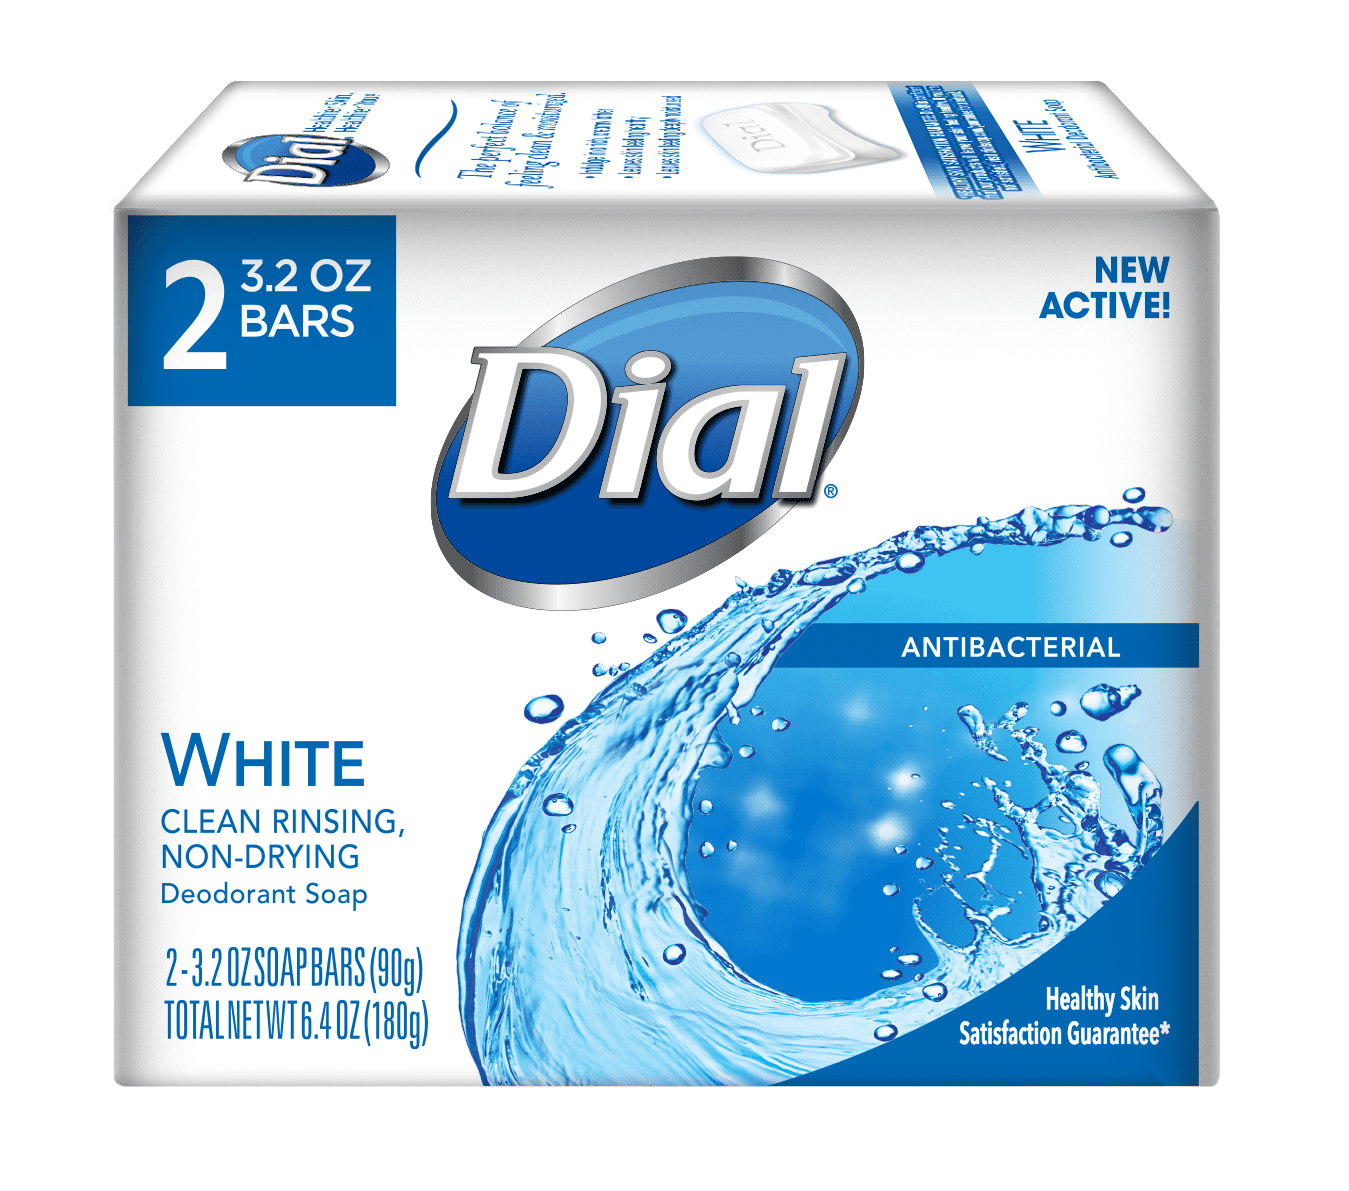 Dial Antibacterial Deodorant Bar Soap, White, 3.2 Ounce, 2 Bars